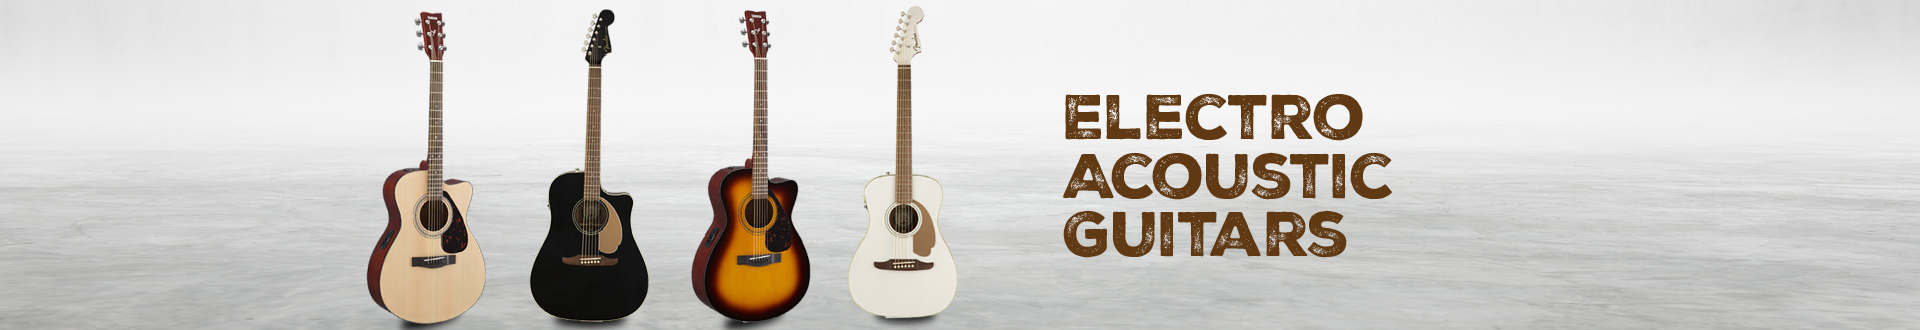 Electro-Acoustic Guitars 